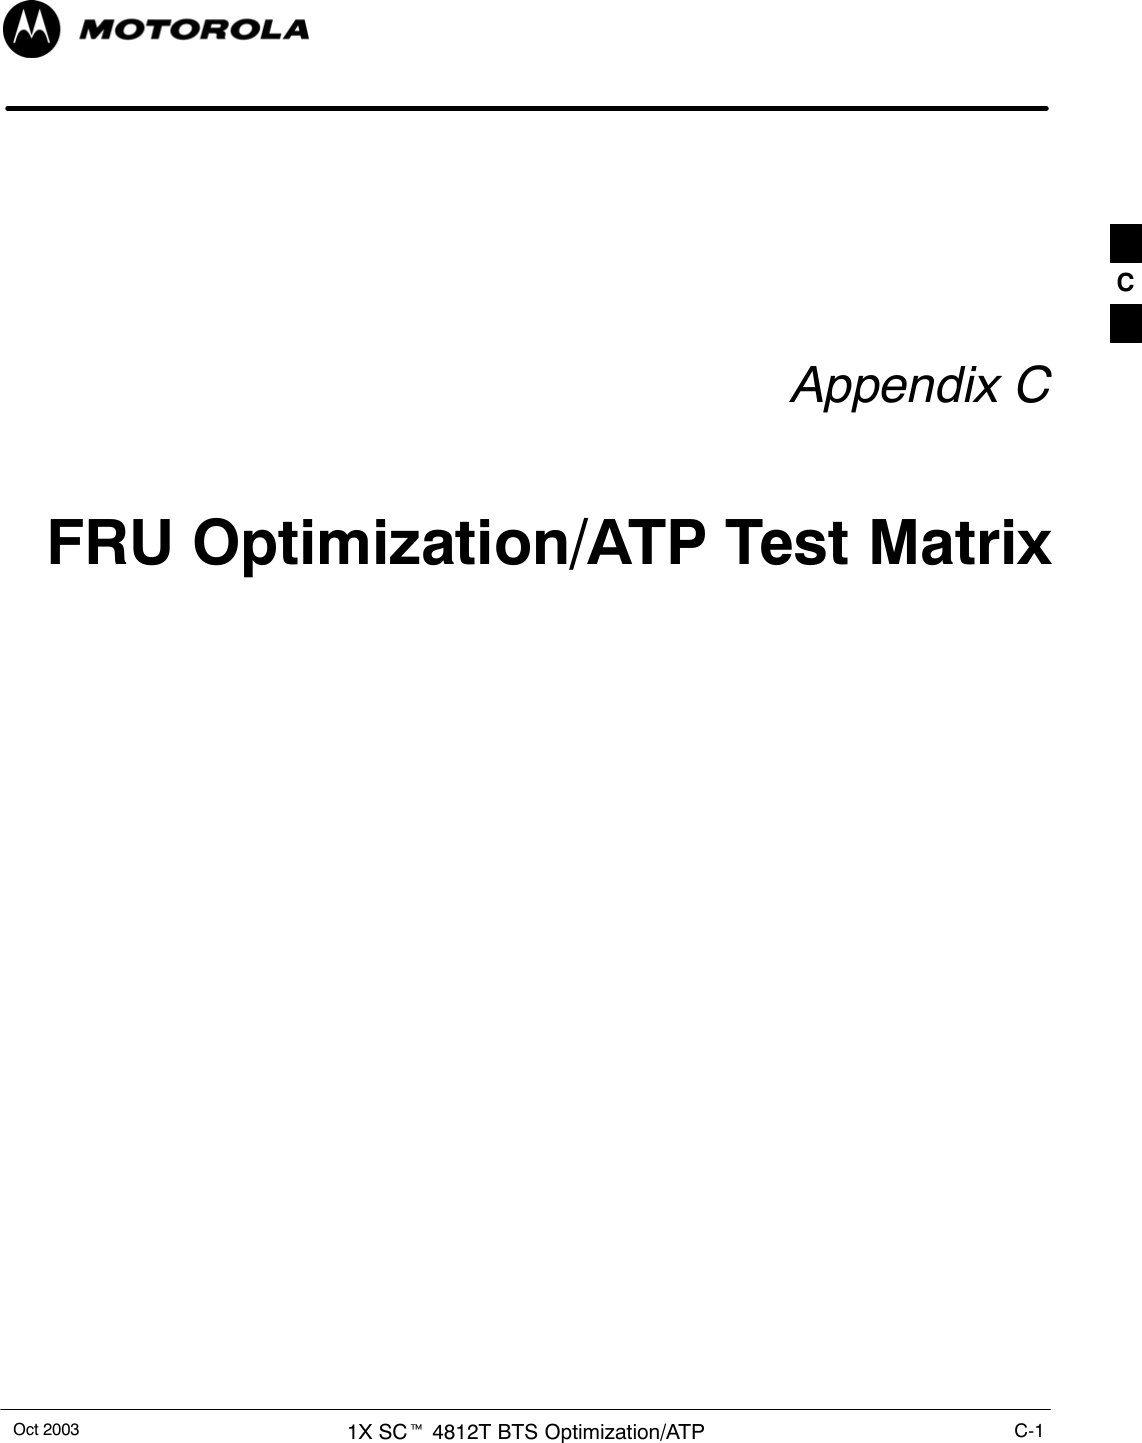 Oct 2003 1X SCt 4812T BTS Optimization/ATP C-1Appendix CFRU Optimization/ATP Test MatrixC